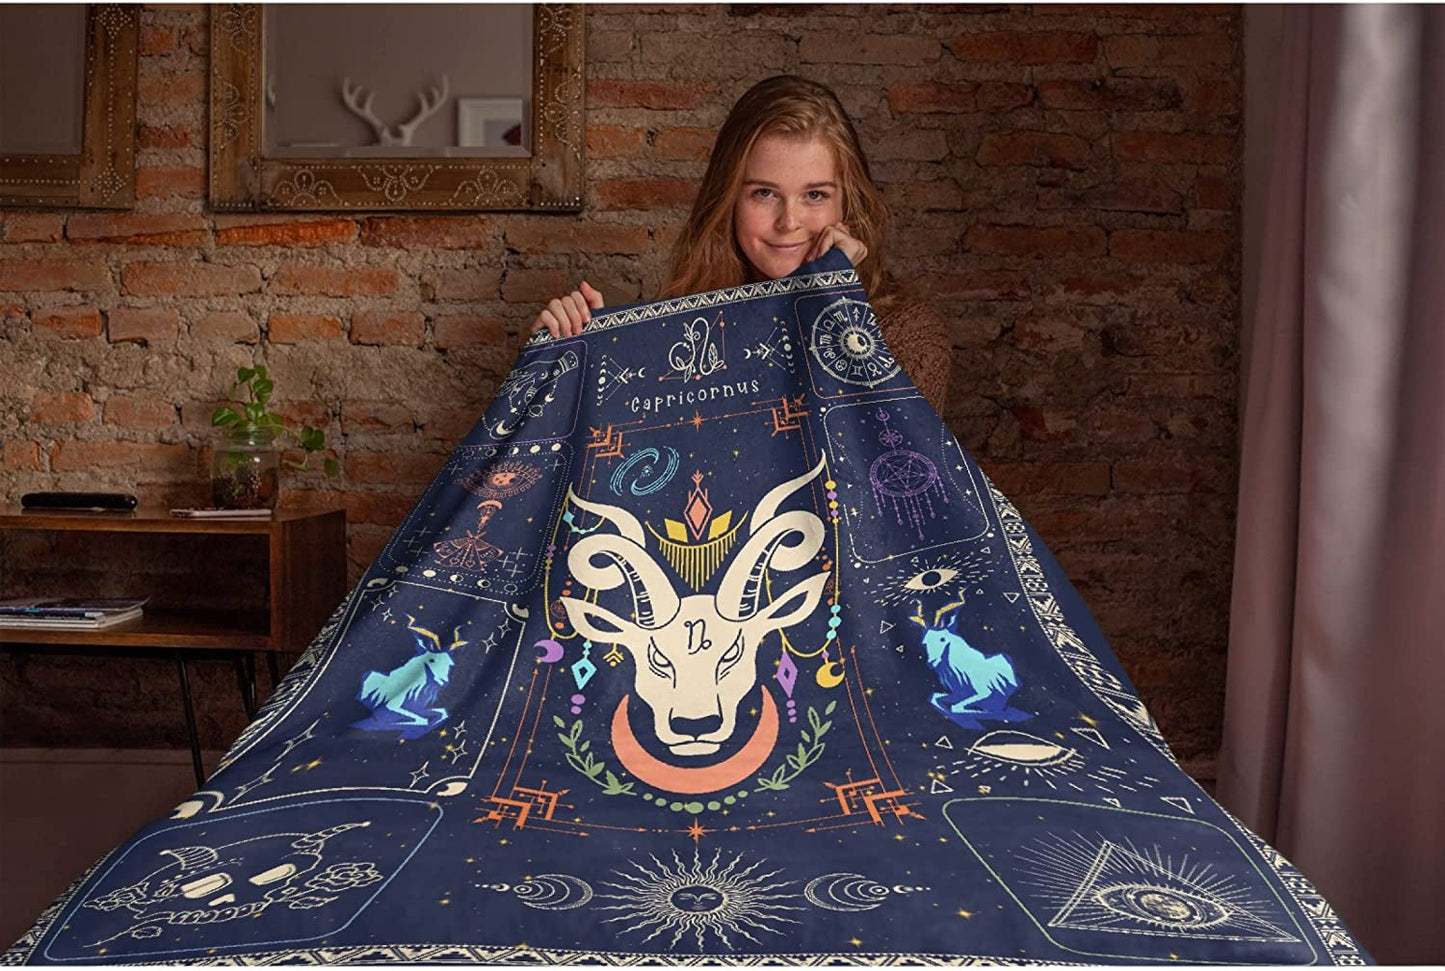 Capricornus Constellation Astrology Blanket Flannel Fleece Throw Soft Cozy Blankets Microfiber Lightweight Warm Cozy Fuzzy Plush for Couch Sofa Bed Office All Season 50"X40" S for Kid